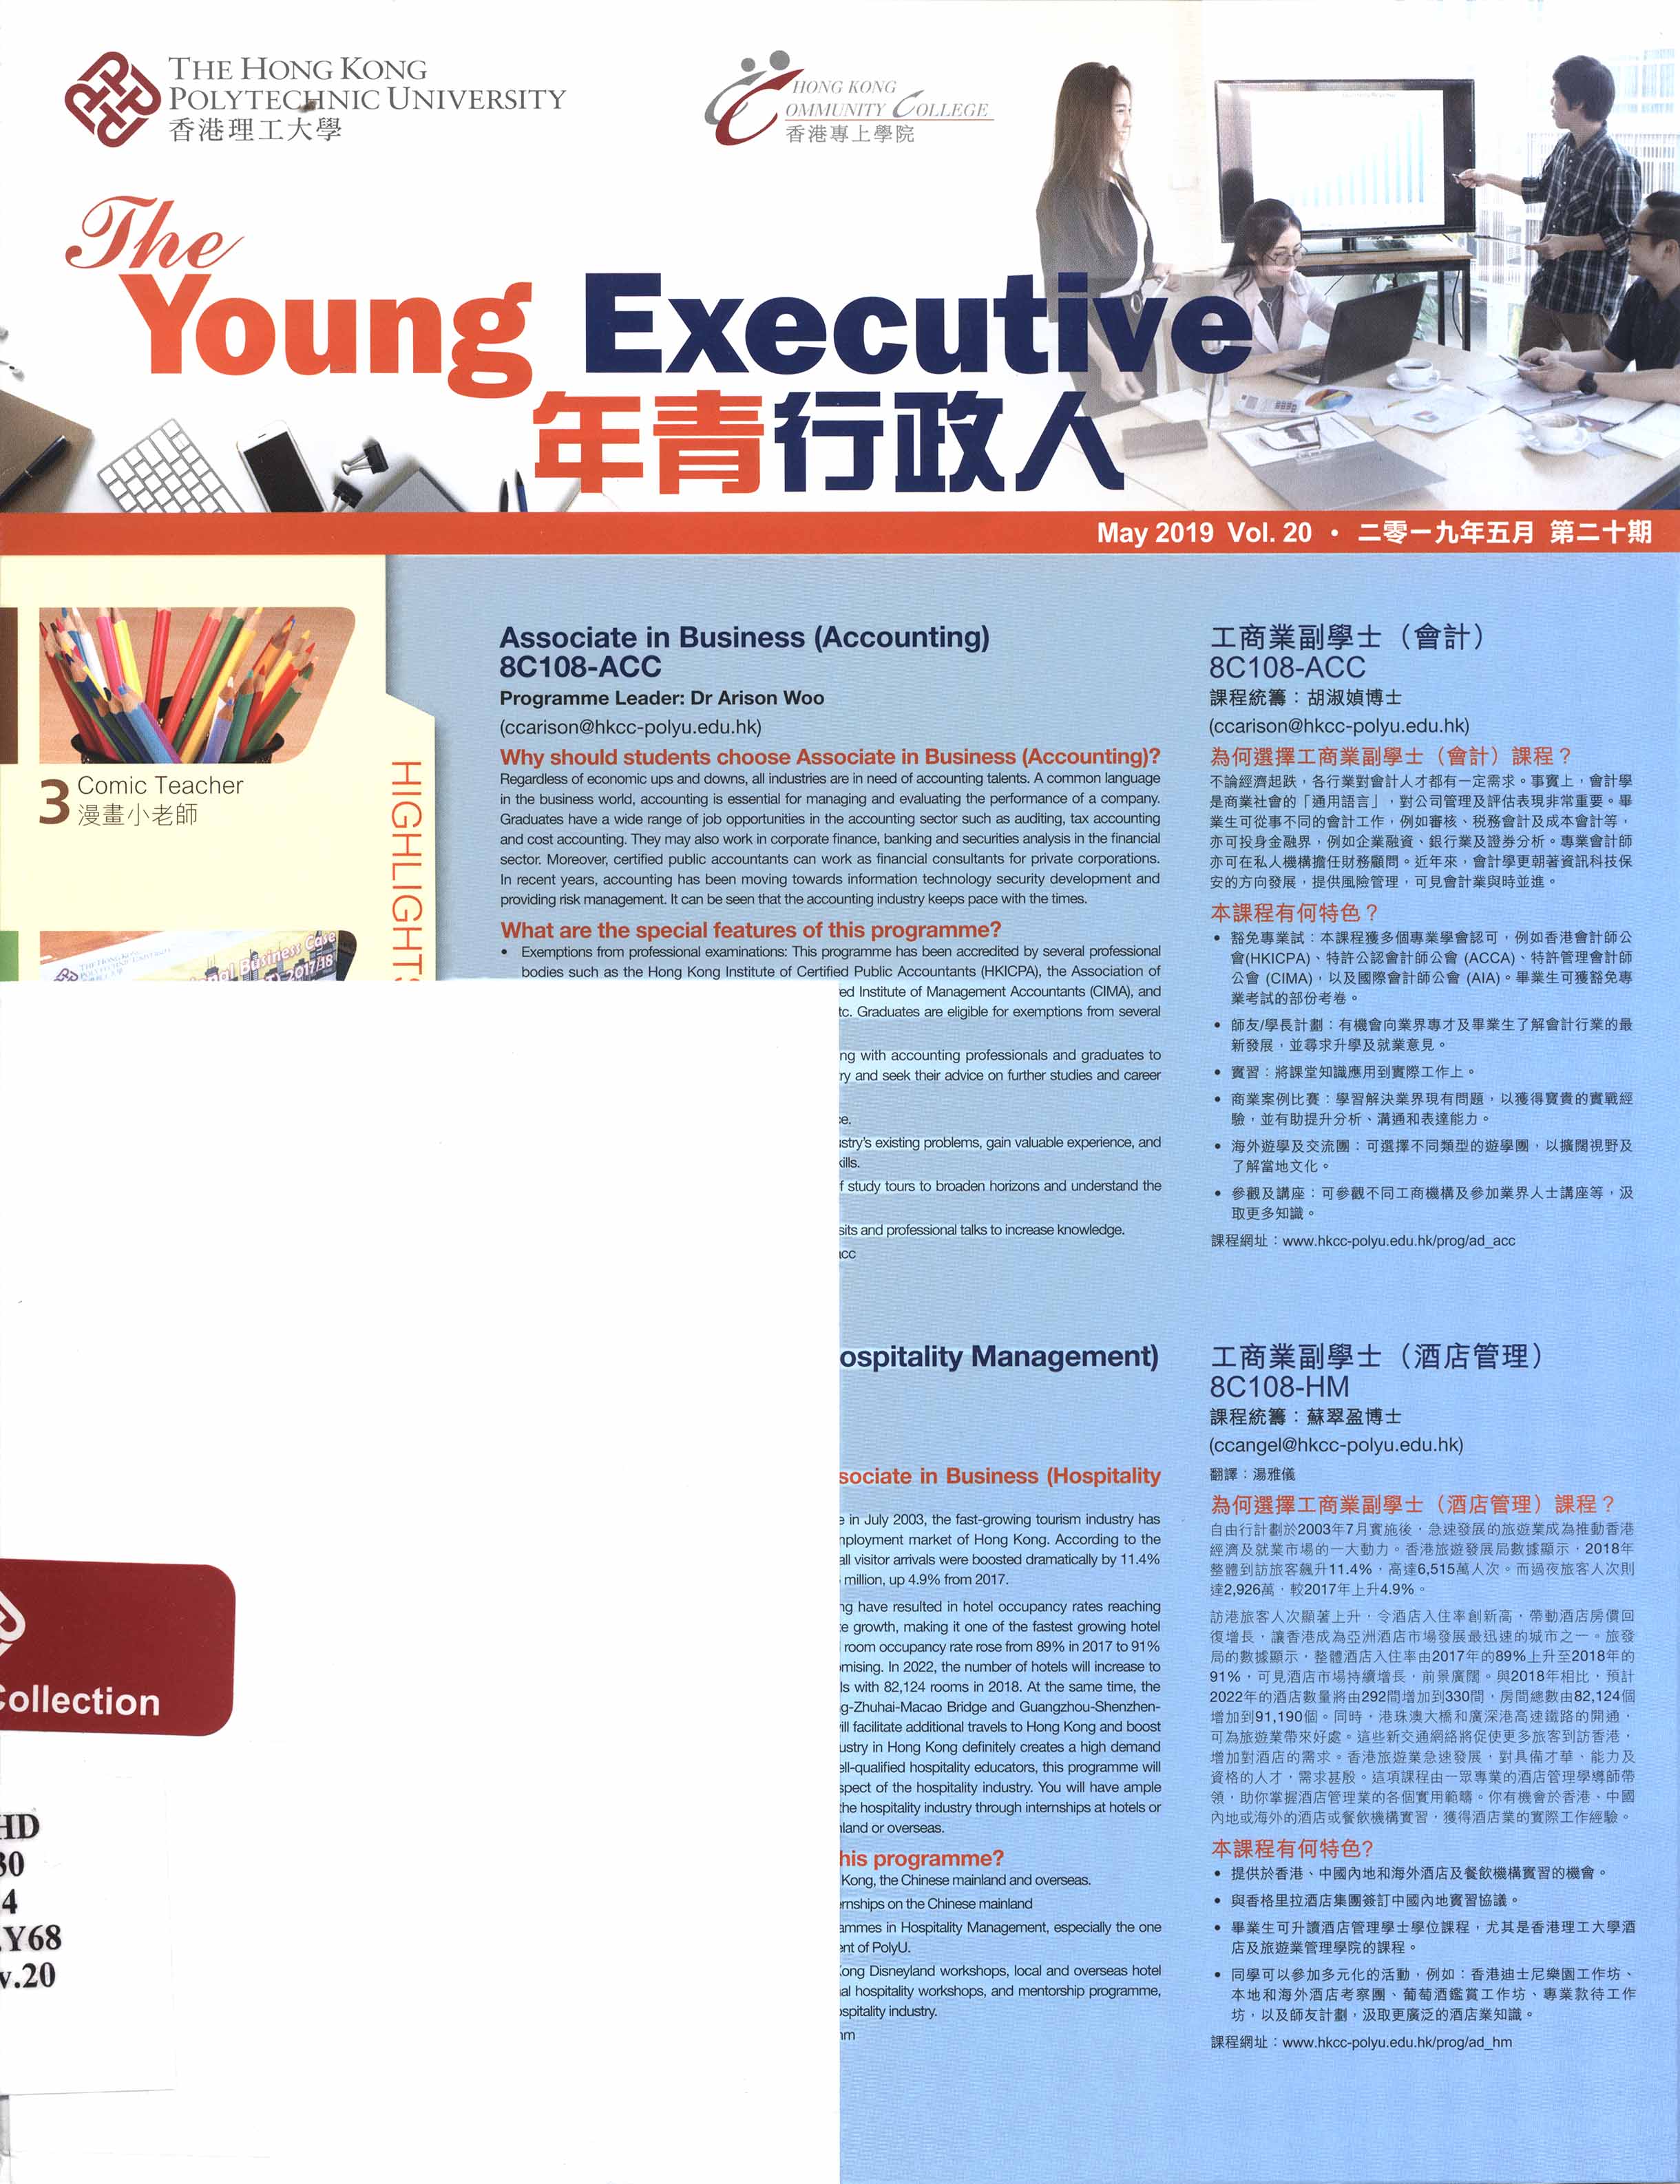 The Young executive. Vol. 20